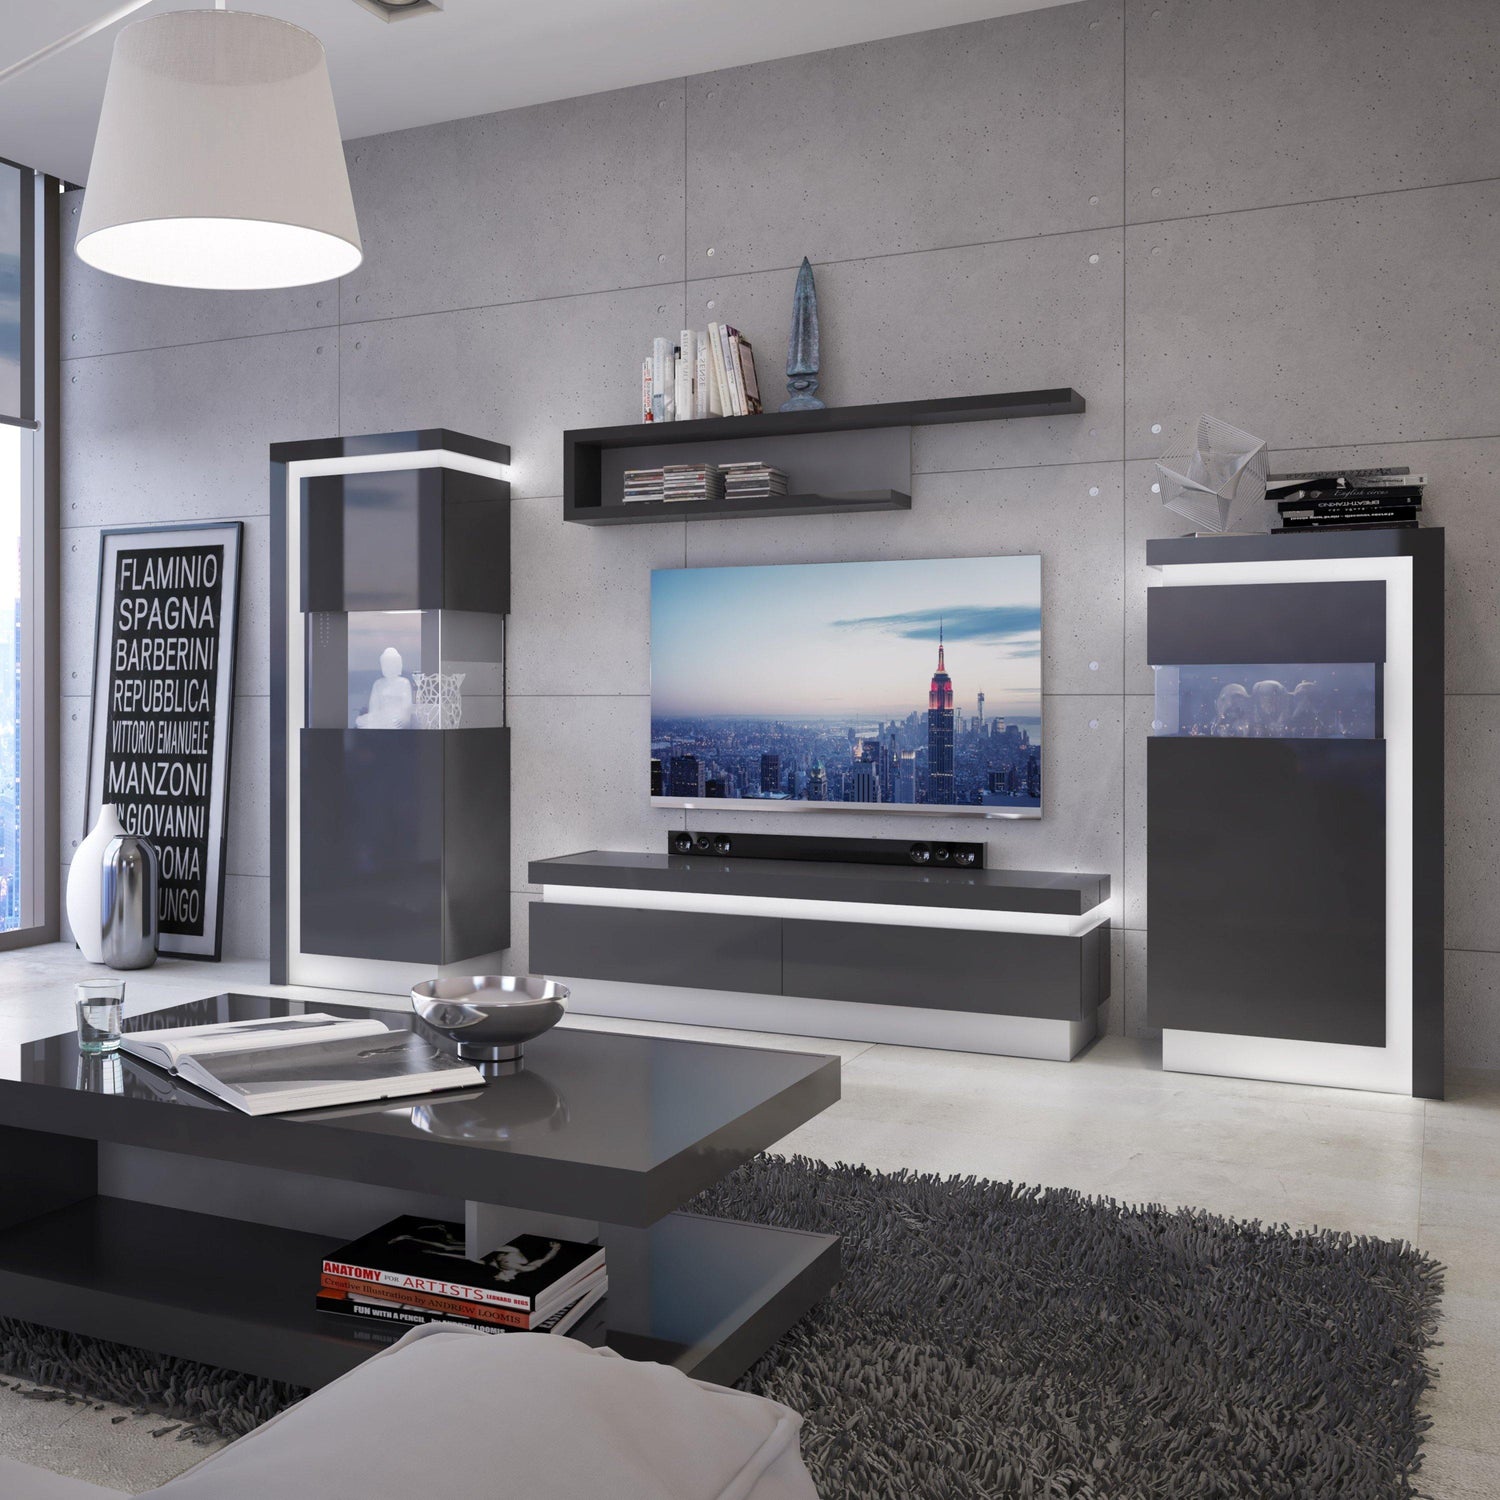 2 drawer TV cabinet (including LED lighting) - Home Utopia 